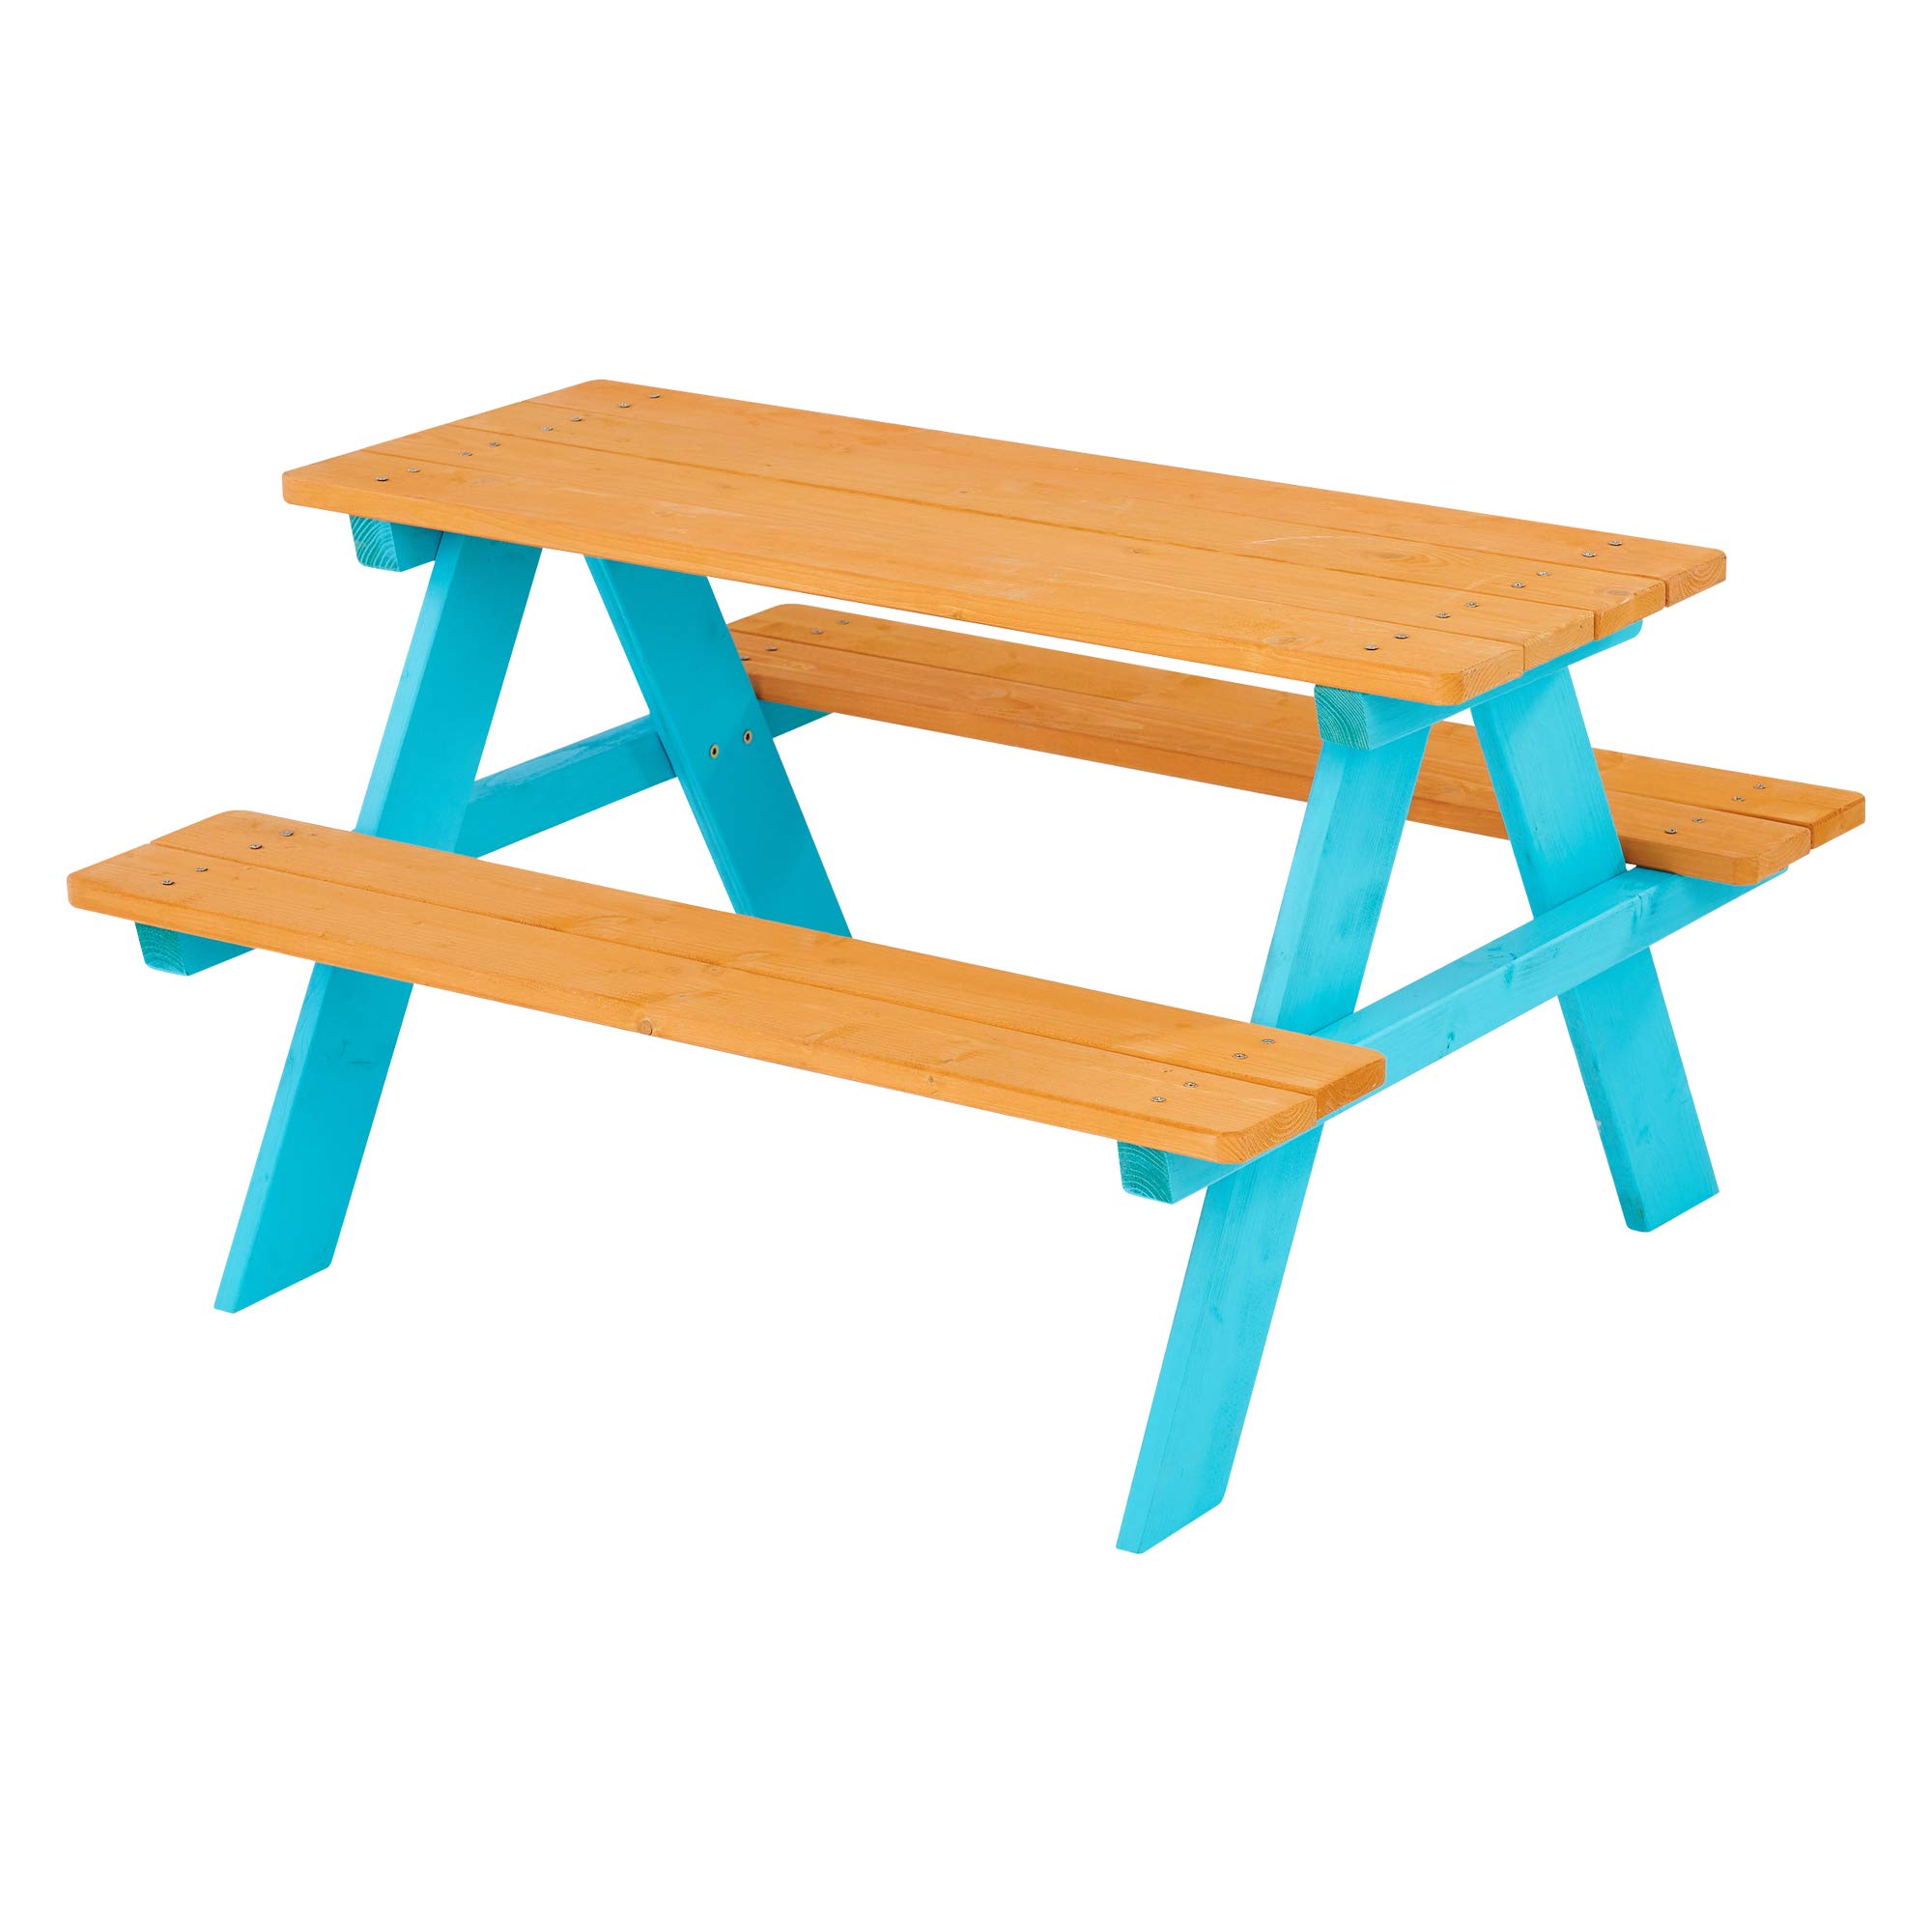 Teamson Kids - Wooden Outdoor Child Children Kids Picnic Table & Chair Bench Set - Brown/Aqua